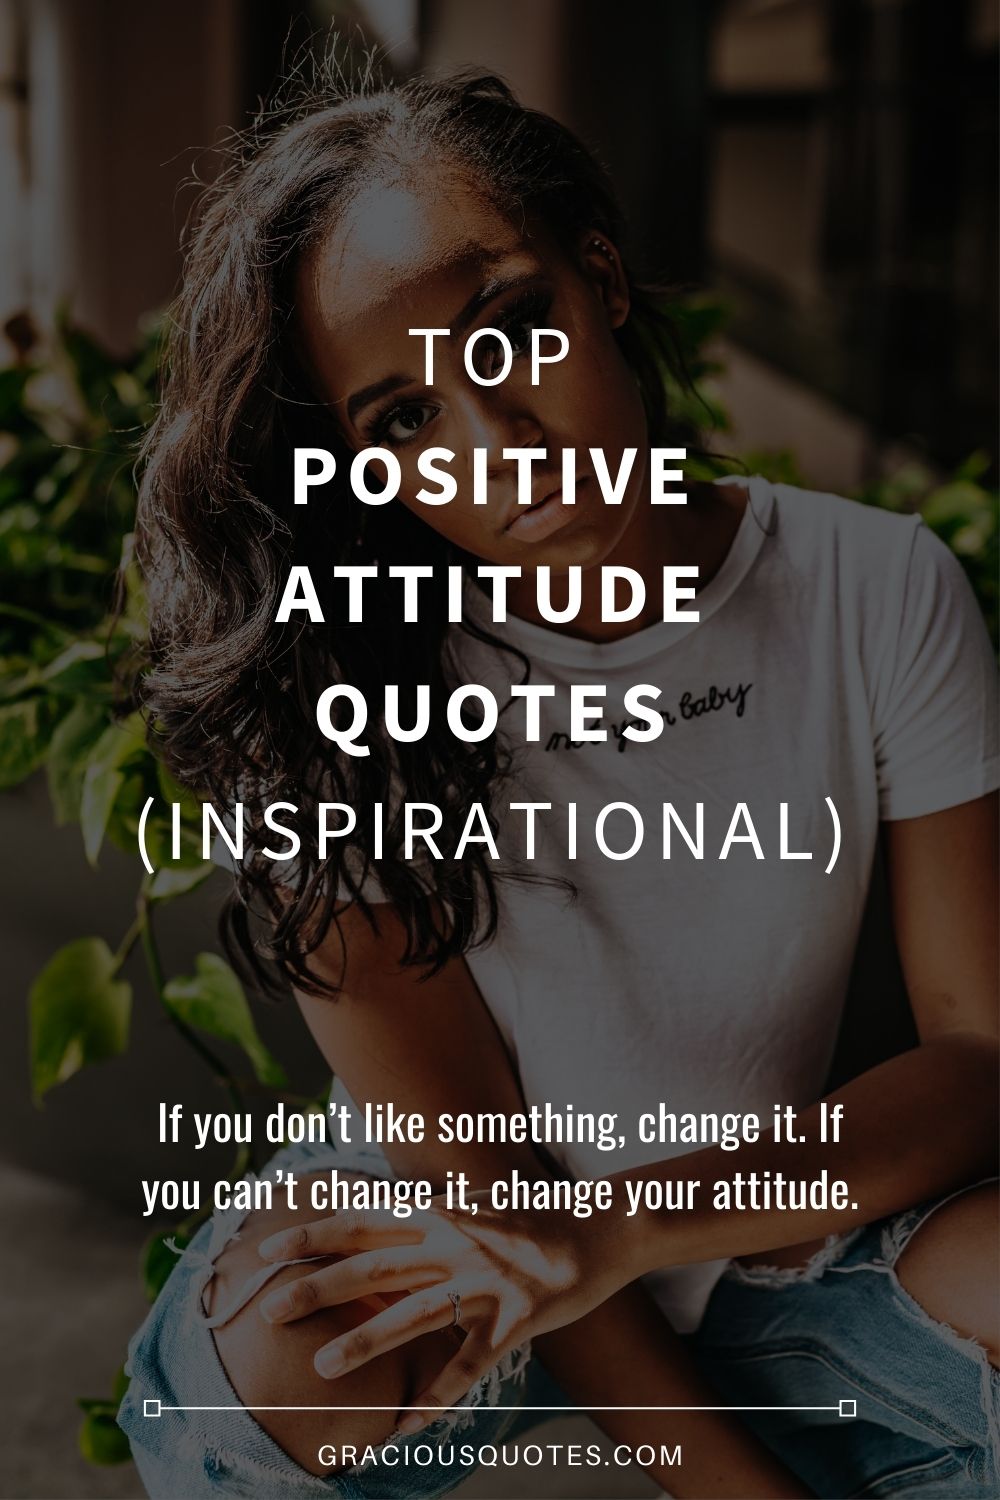 Top Positive Attitude Quotes (INSPIRATIONAL) - Gracious Quotesv